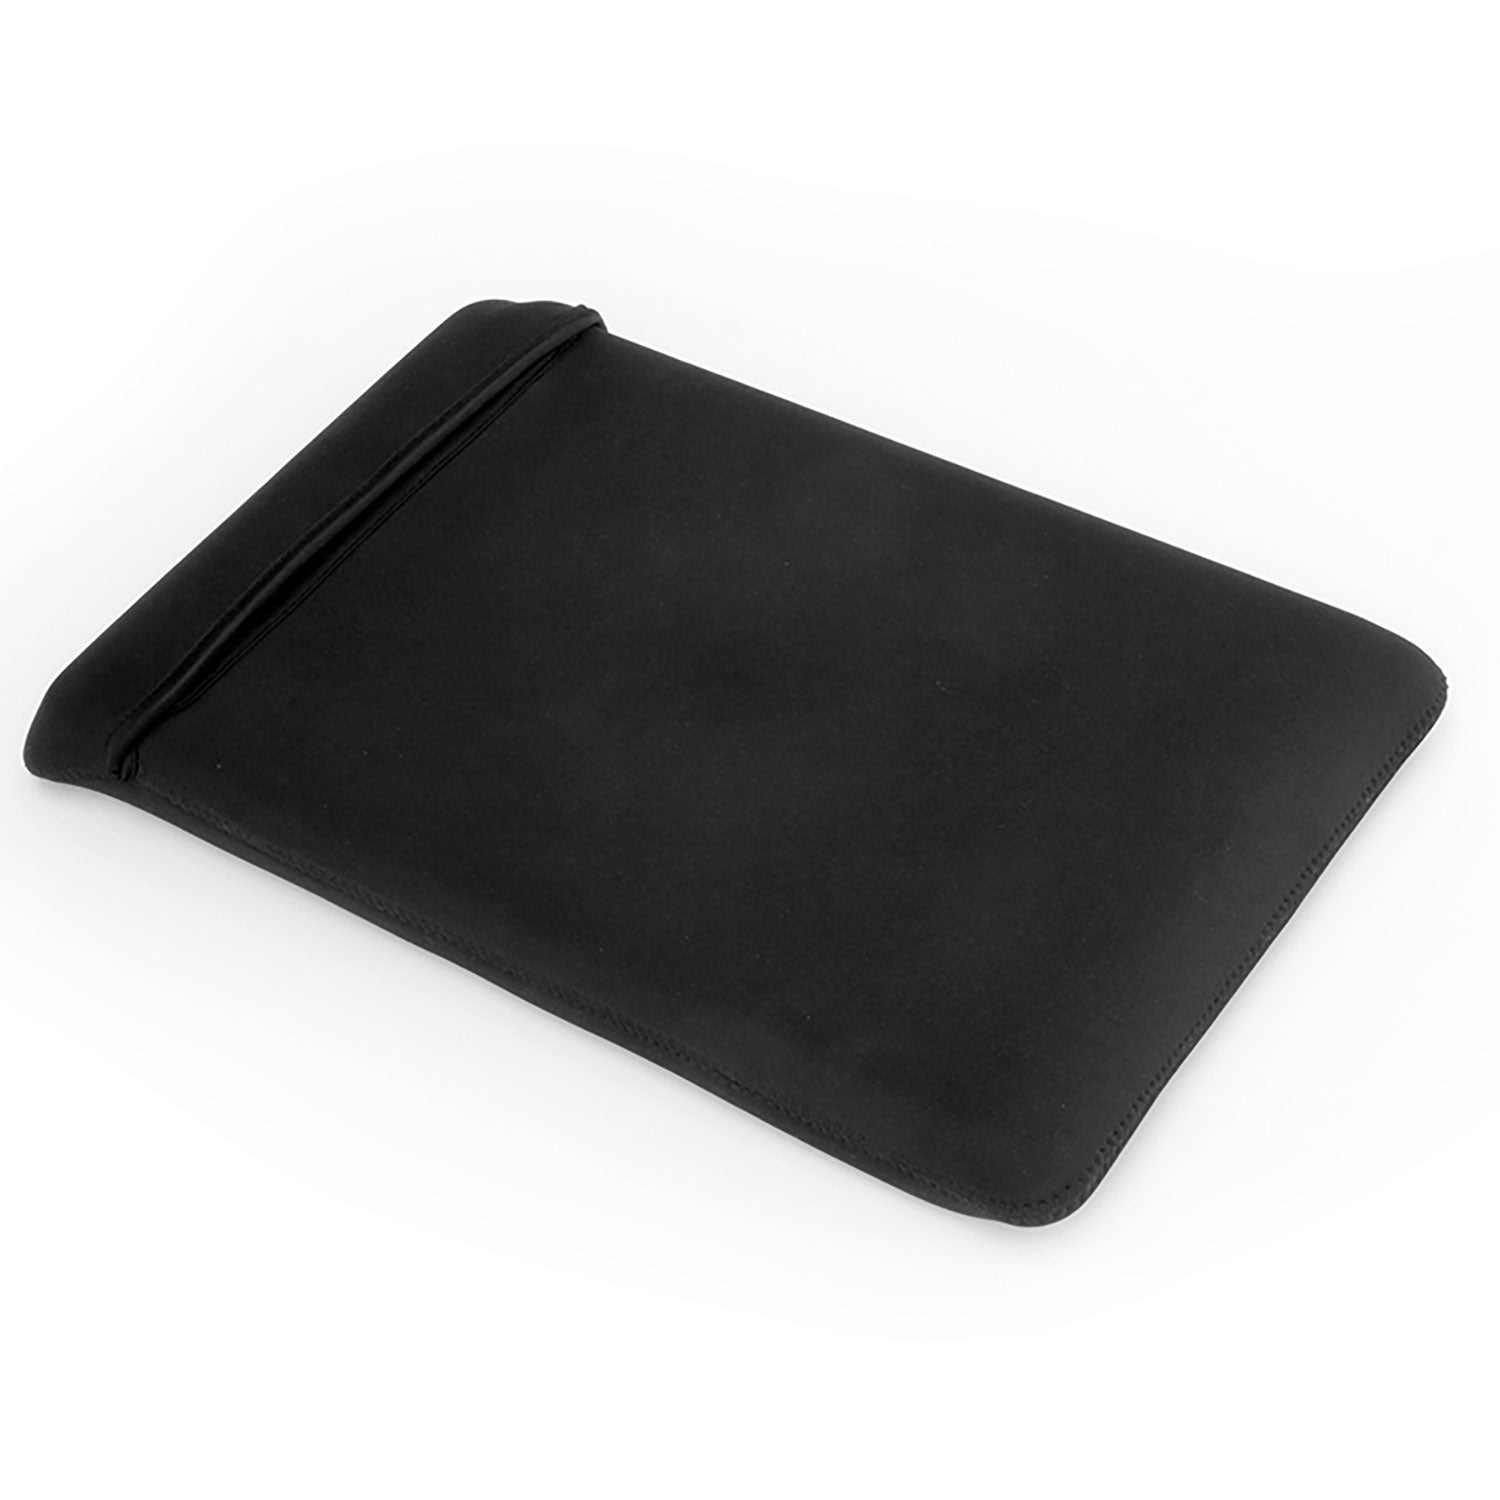 Grifiti Chiton 13 Laptop Sleeve and Travel Deck Lap Desk Bundle for MacBooks Notebooks Tablets - Grifiti